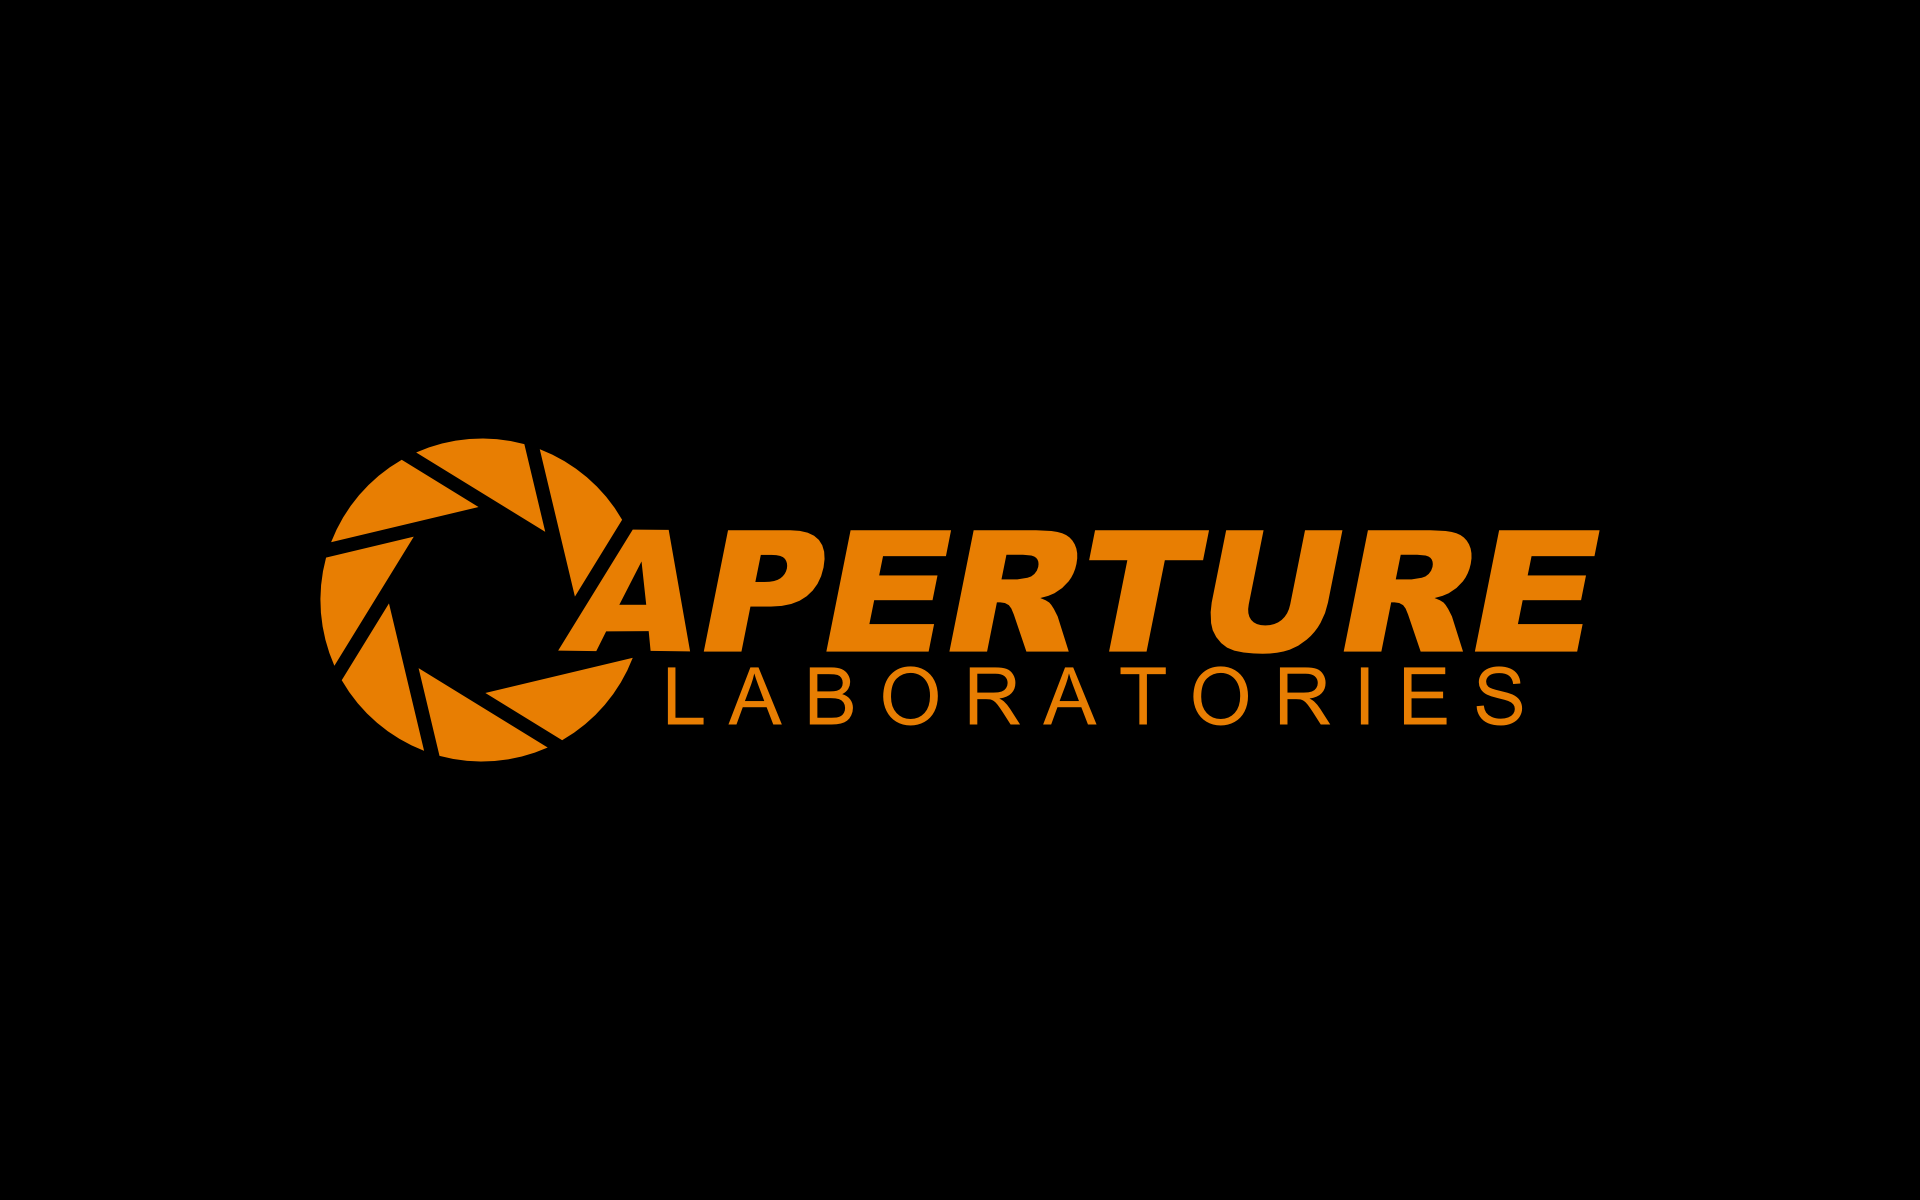 видеоигры, Корпорация Valve, Портал, Aperture Laboratories - обои на рабочий стол